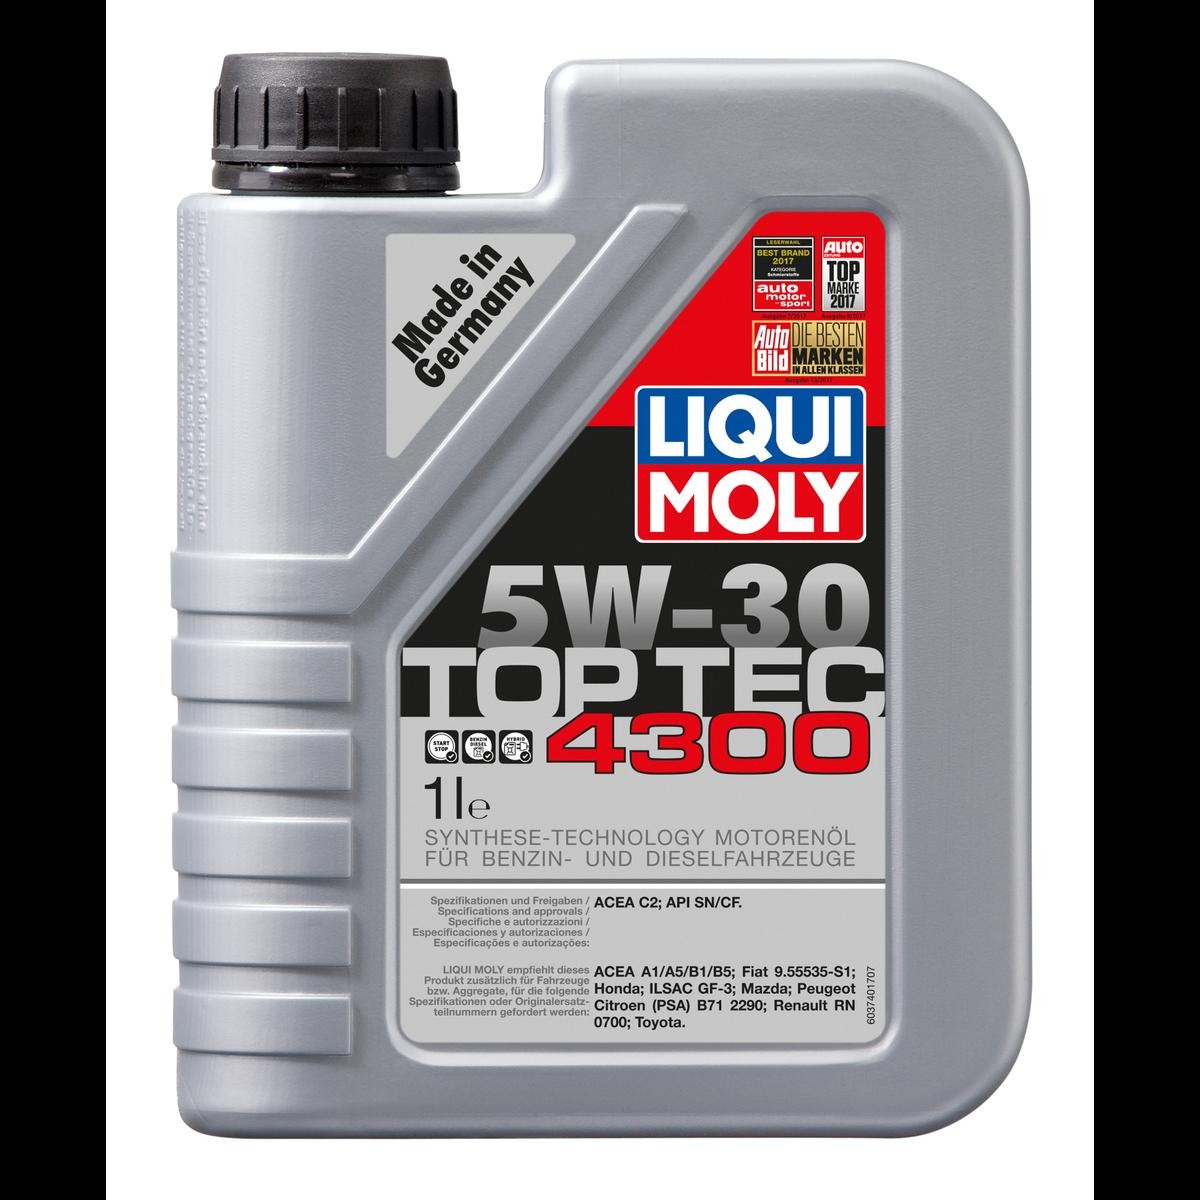 LIQUI MOLY Top Tec, 4300 5W-30, 1l, Full Synthetic Oil Motor oil 3740 buy